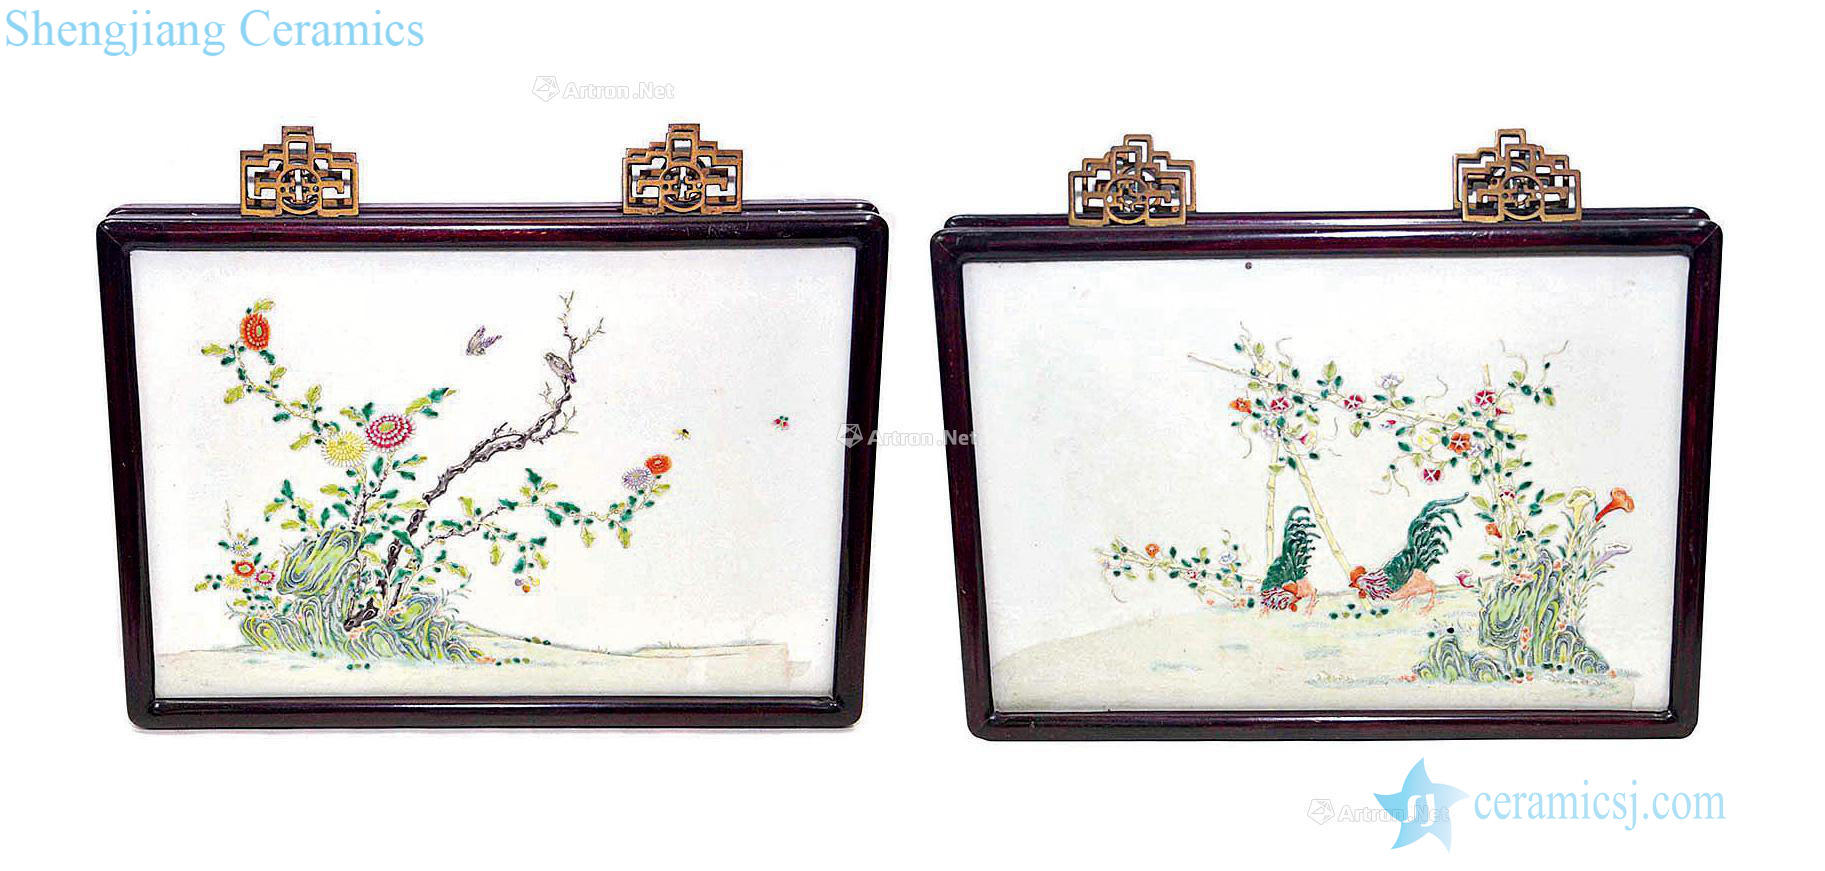 Qing convex porcelain famille rose porcelain plate frame (a pair)